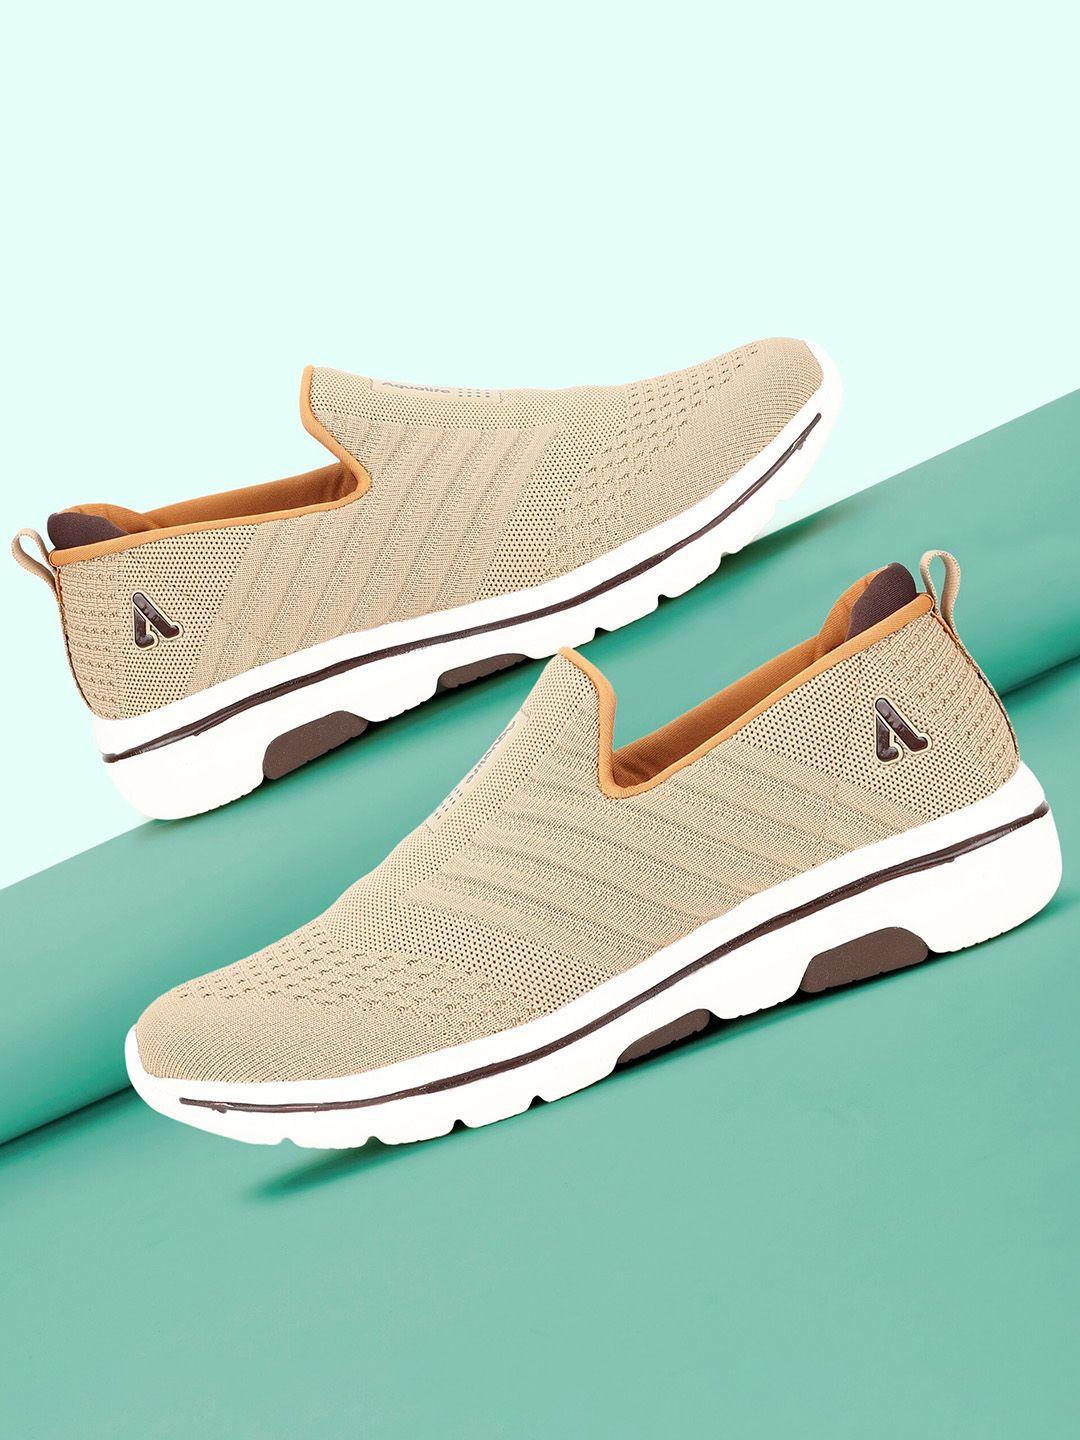 aqualite-men-elastic-fit-technology-non-marking-walking-sports-shoes